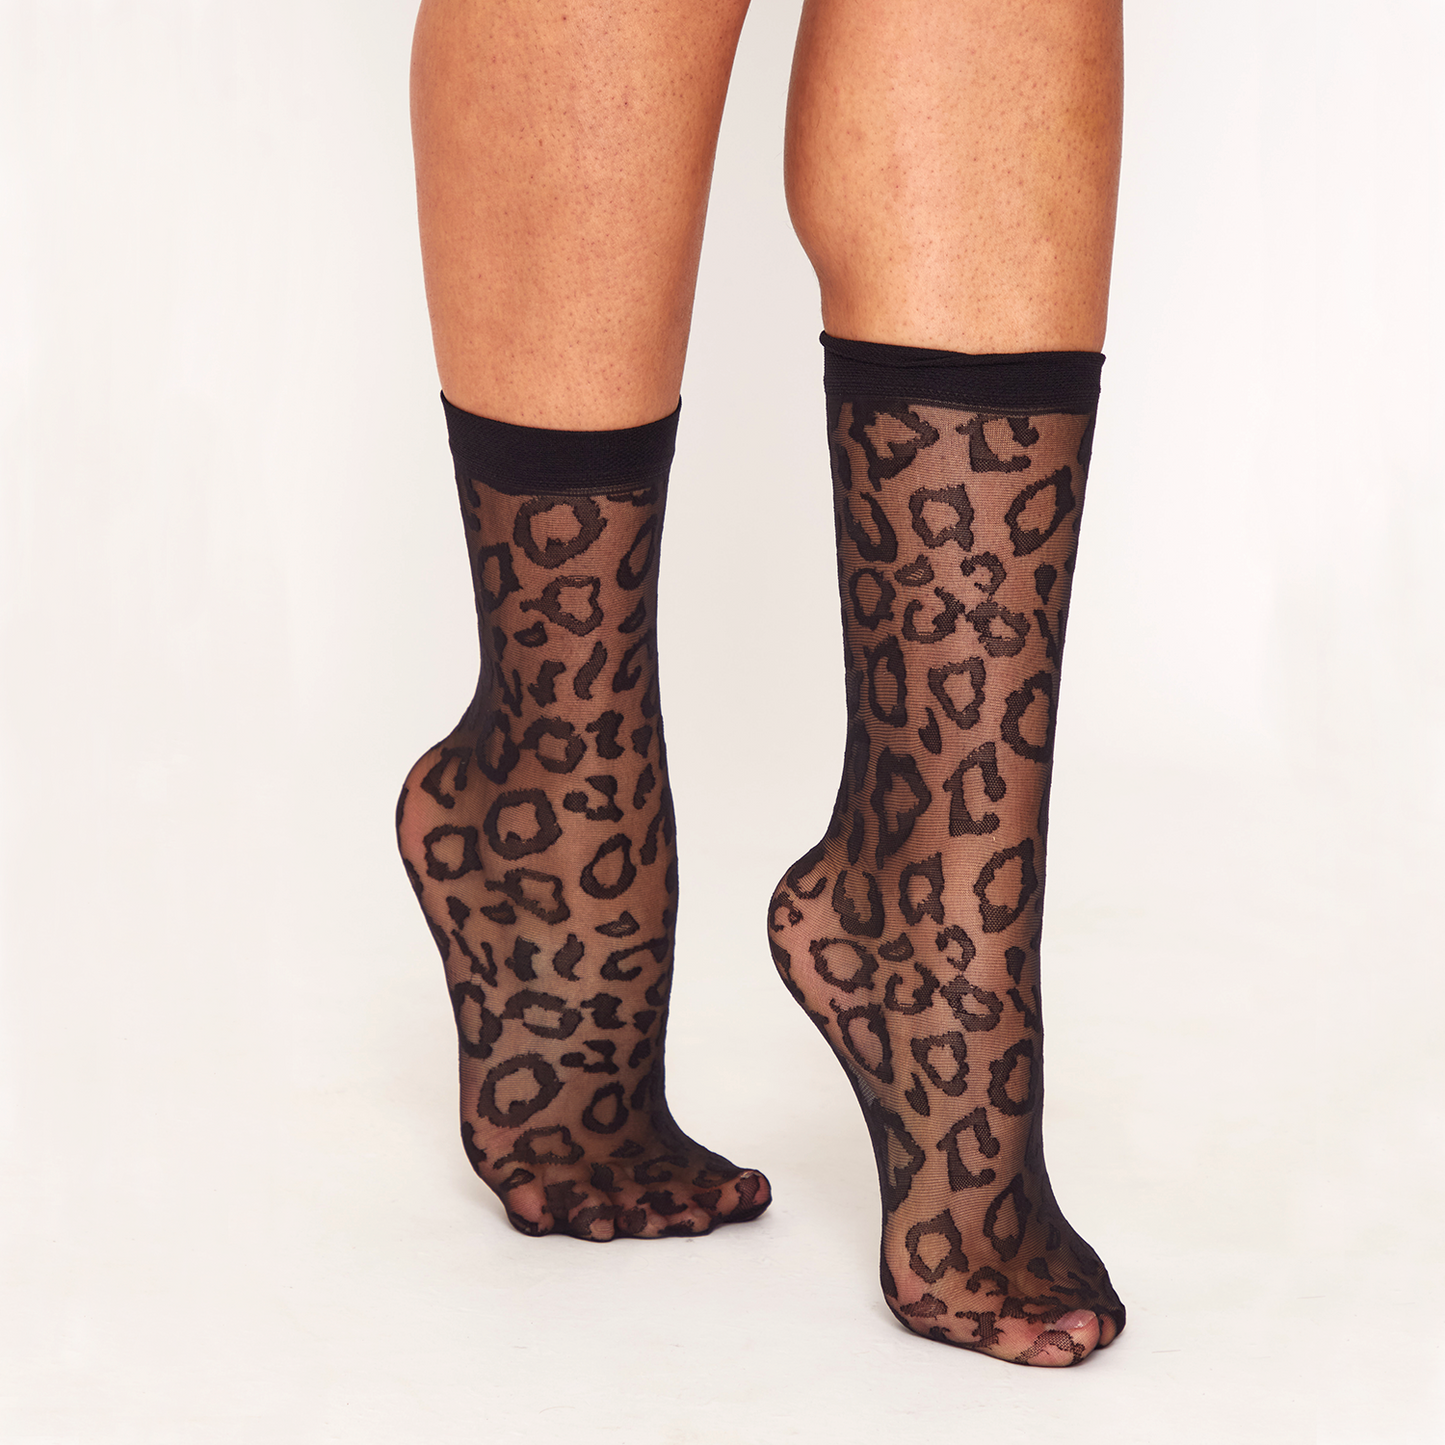 Black Sheer Leopard Socks Tights